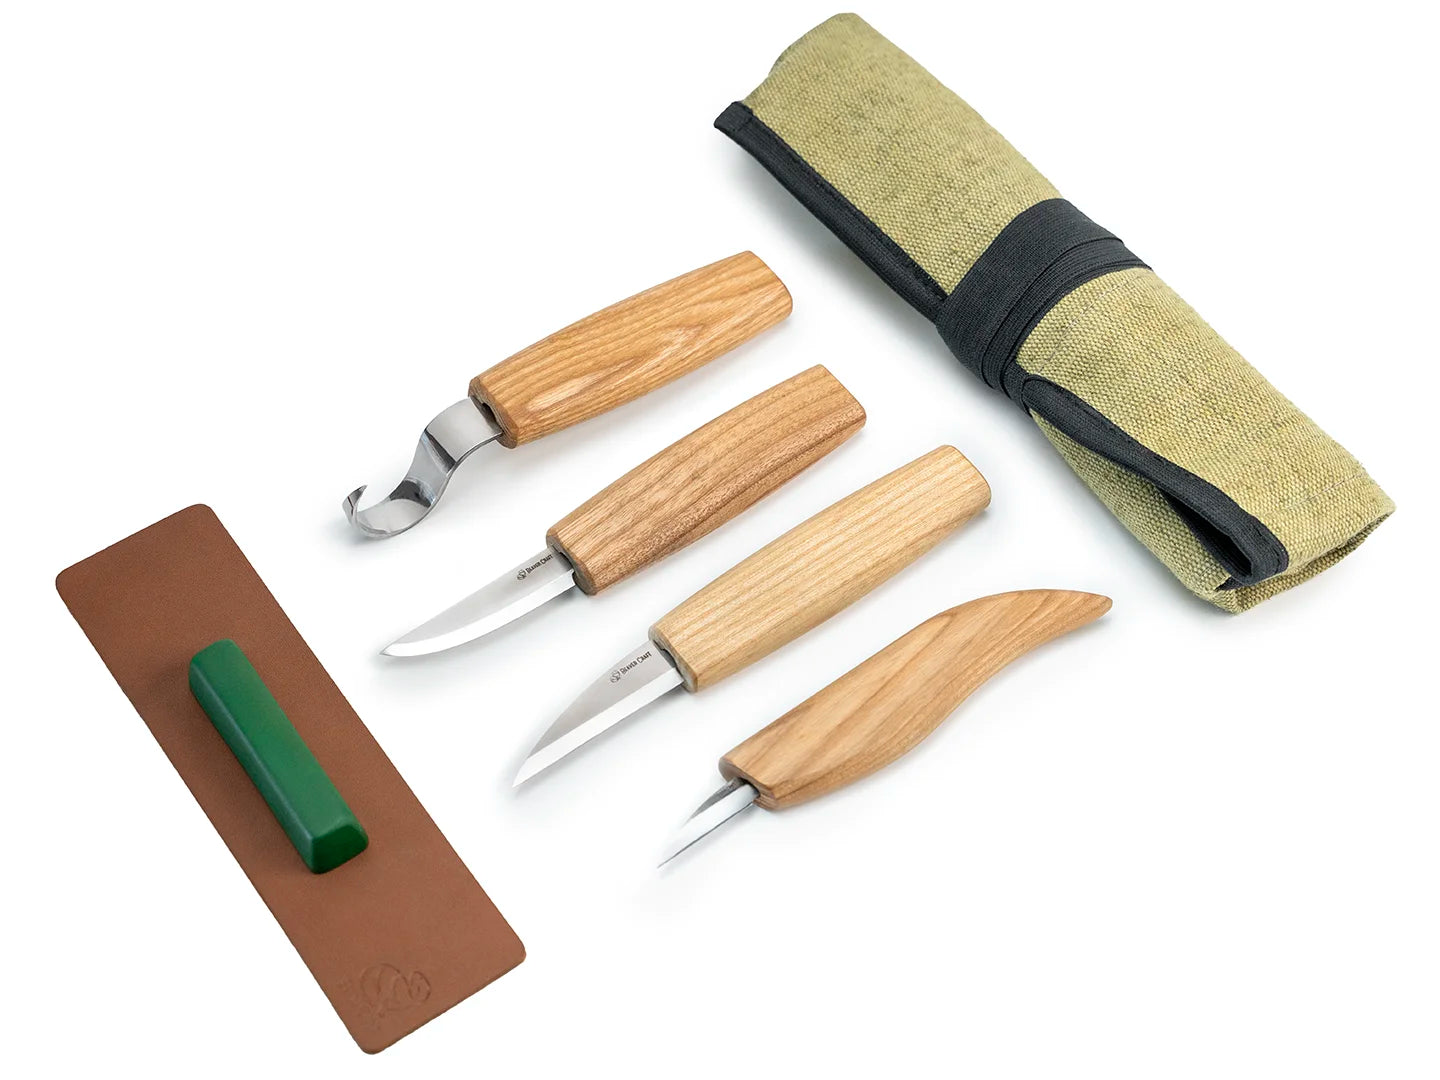 Wood Carving Set of 10 Tools Professional Wood Carving Set Wood Carving  Tools Beavercraft 